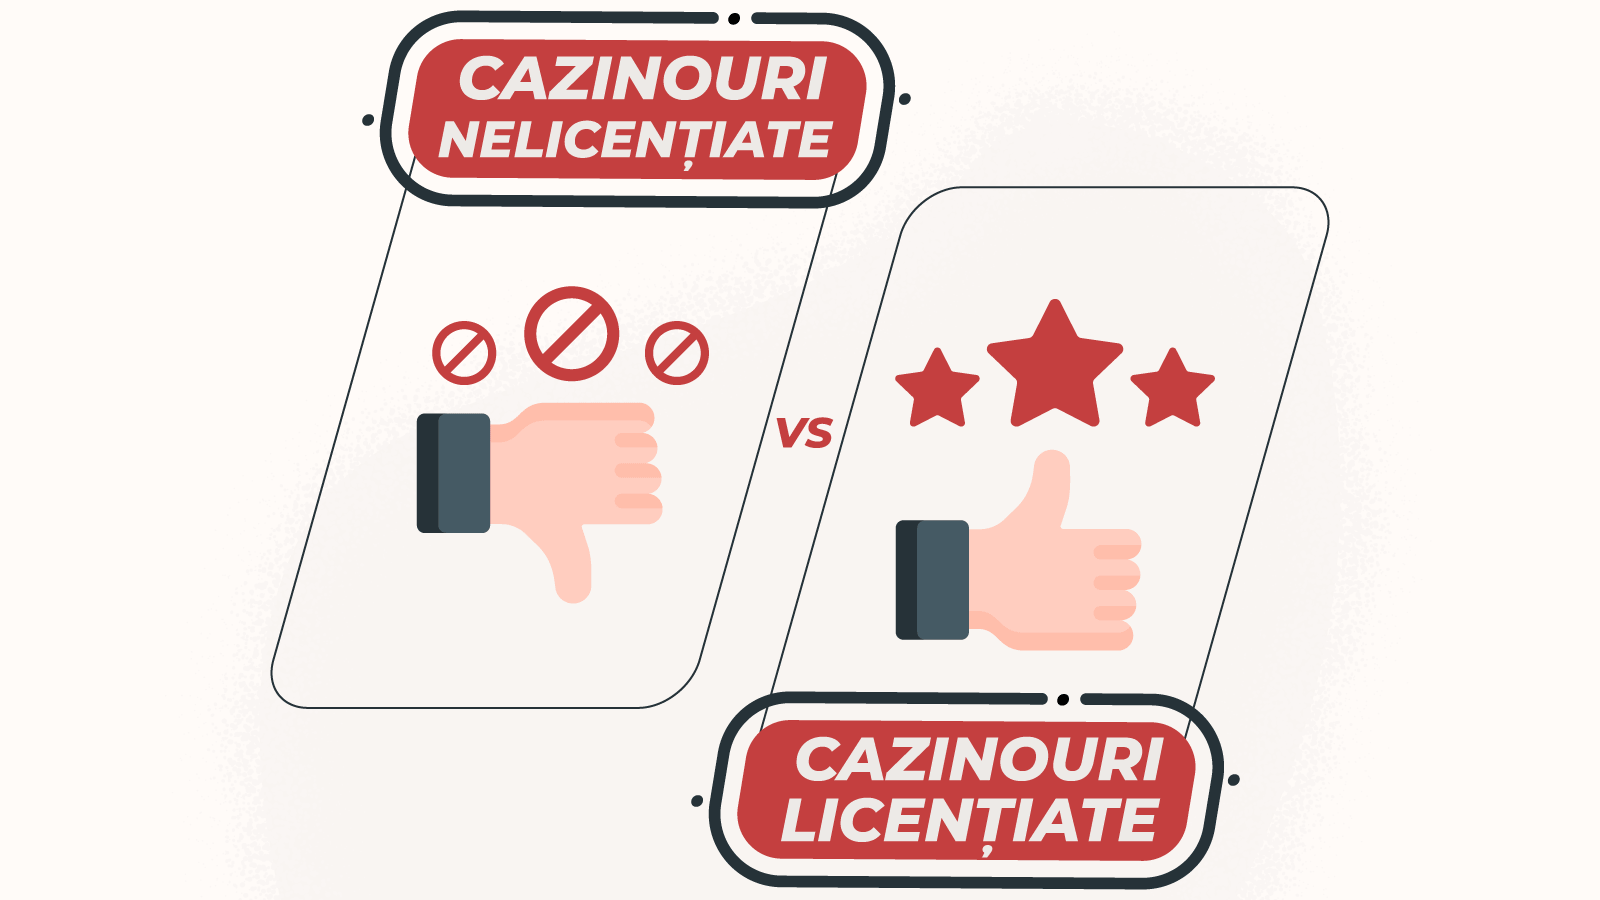 Cazinouri nelicențiate vs Cazinouri licențiate - Diferențe